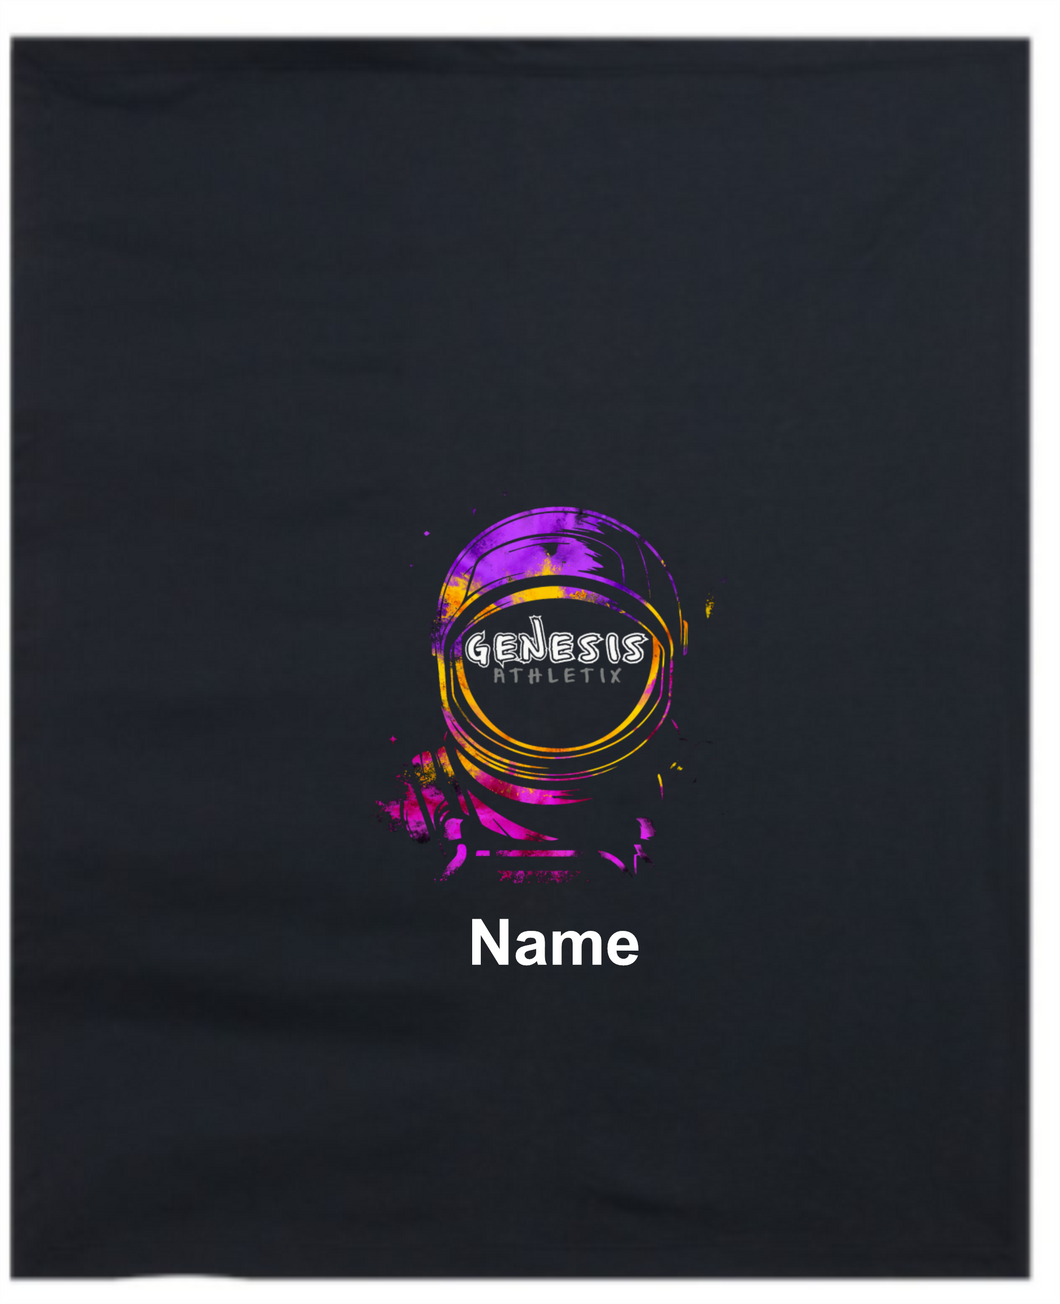 Genesis Athletix Gildan Sweatshirt Stadium Blanket with Name 50